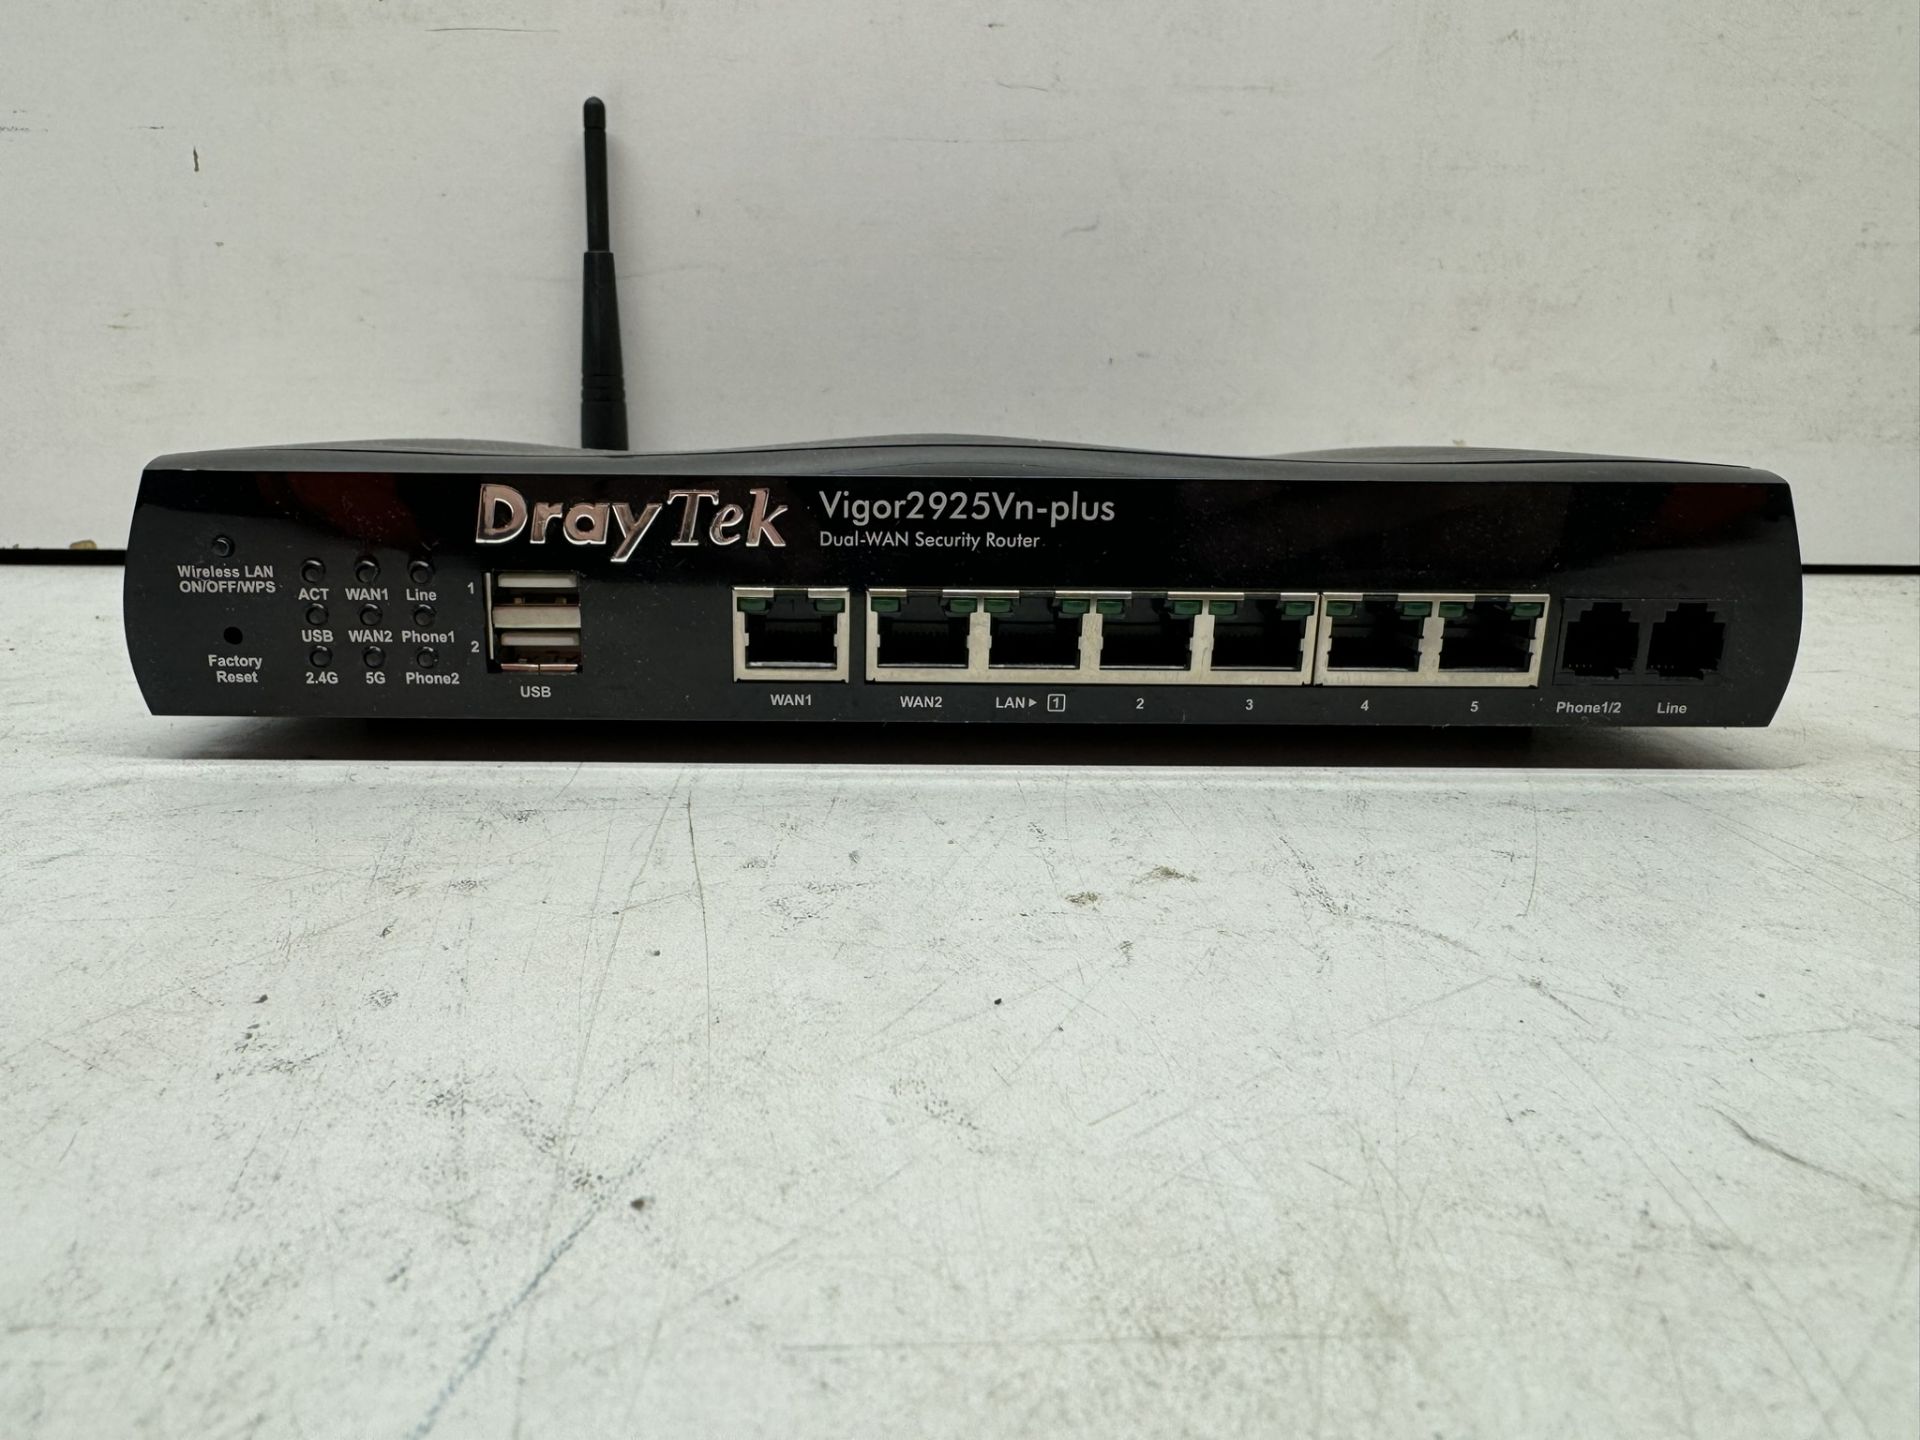 Draytek Vigor 2925Vn Plus Dual-WAN Security Router - Bild 2 aus 4